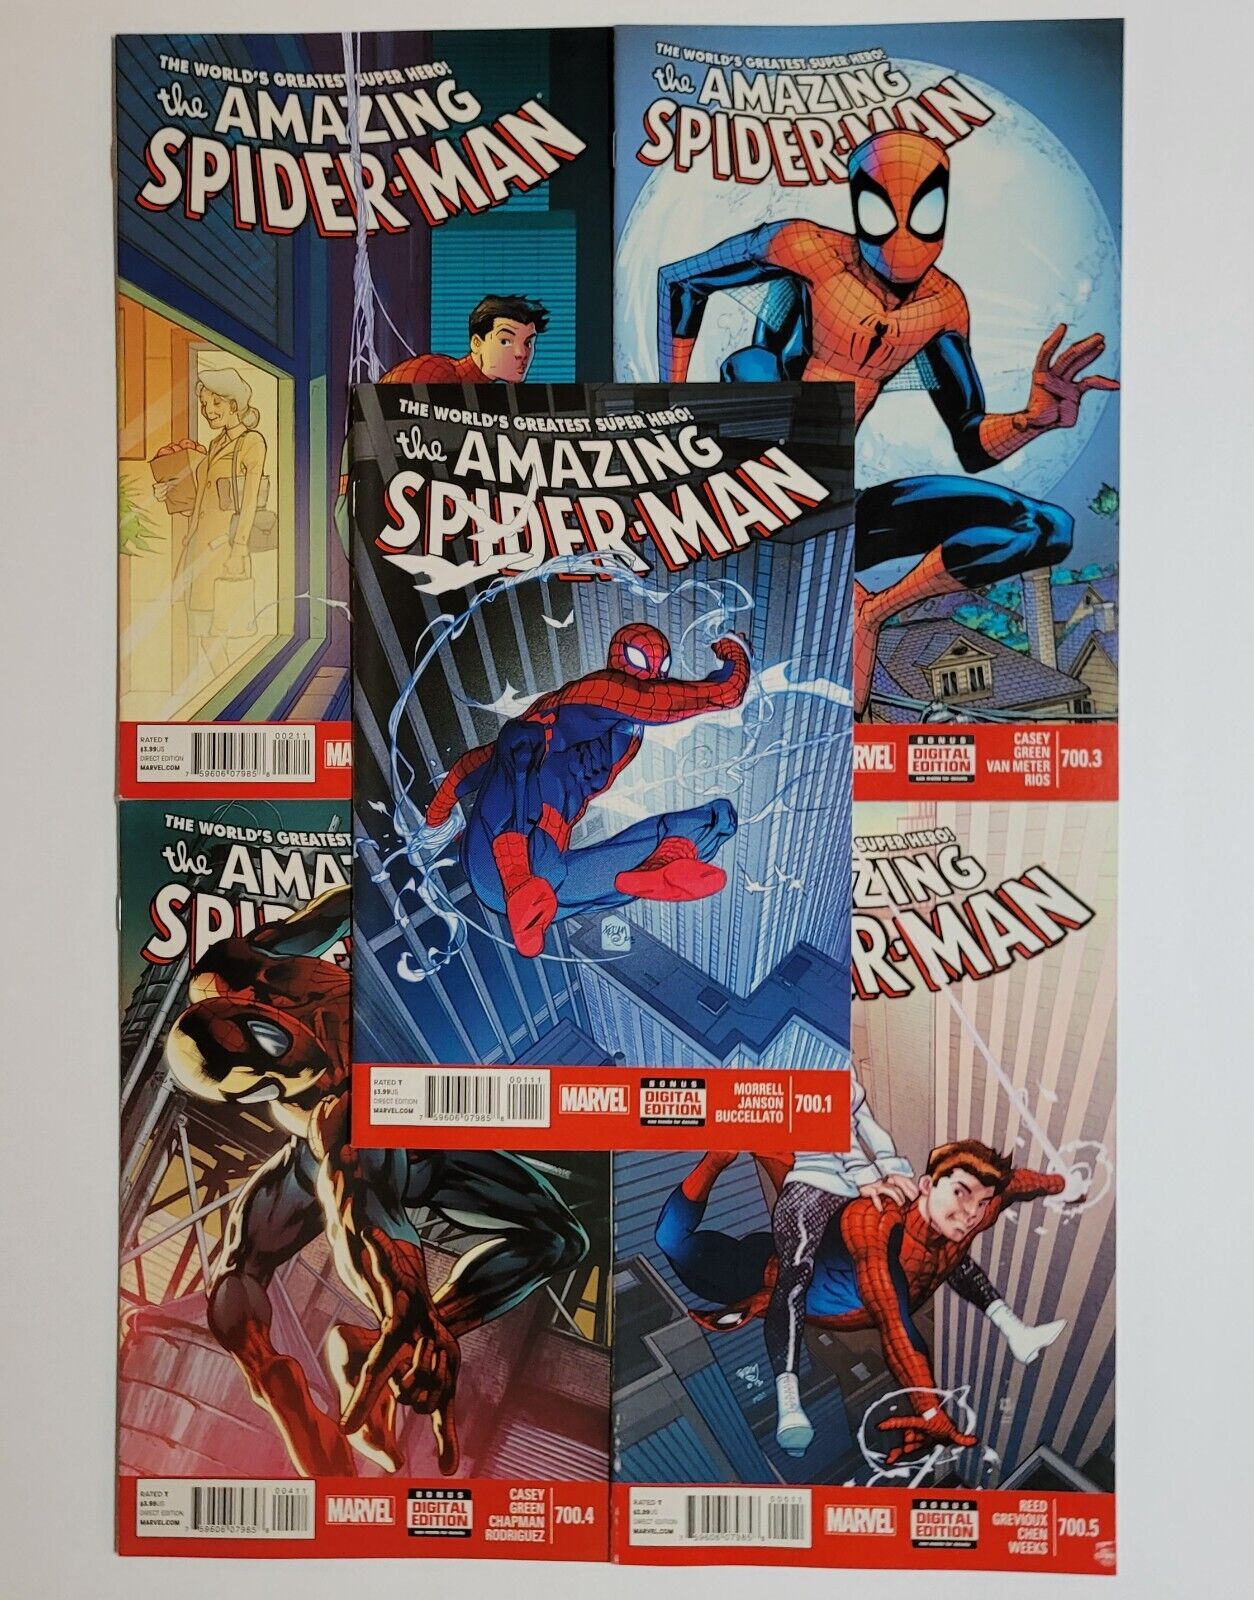 Amazing Spider-Man Issues 700.1  - 700.5 Marvel Comics 2013